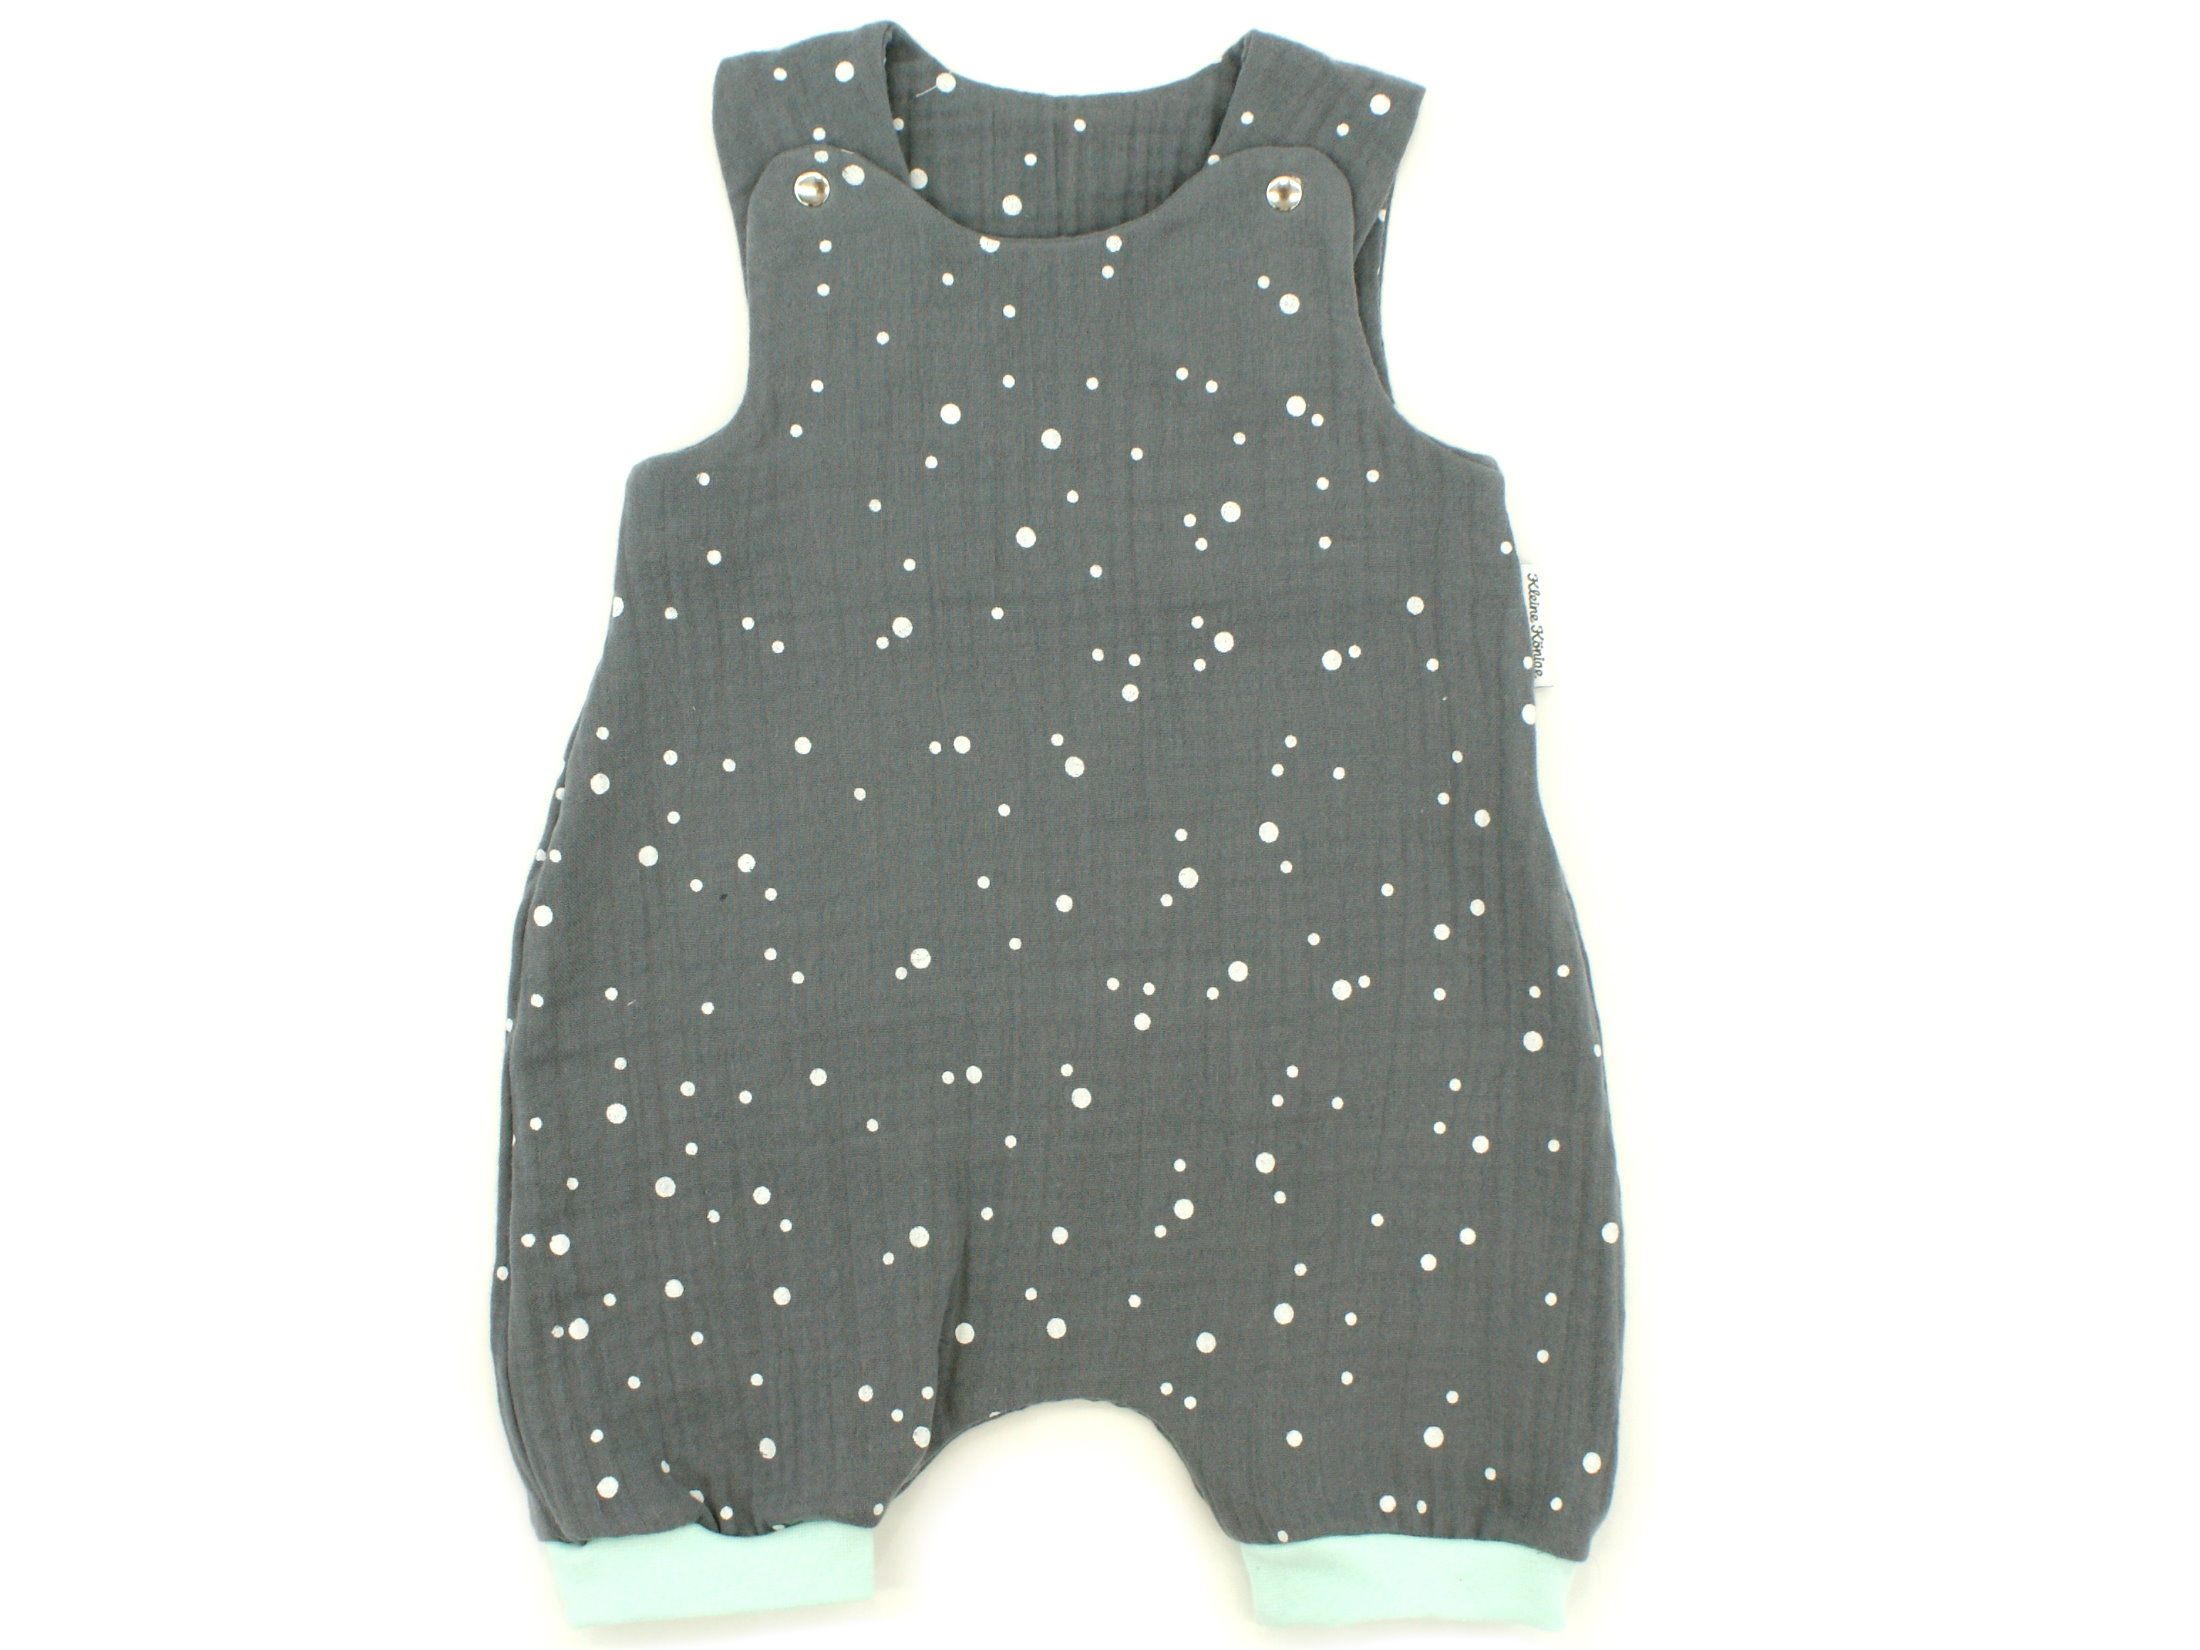 Musselin Baby Kurzstrampler "White Dots" grau aqua